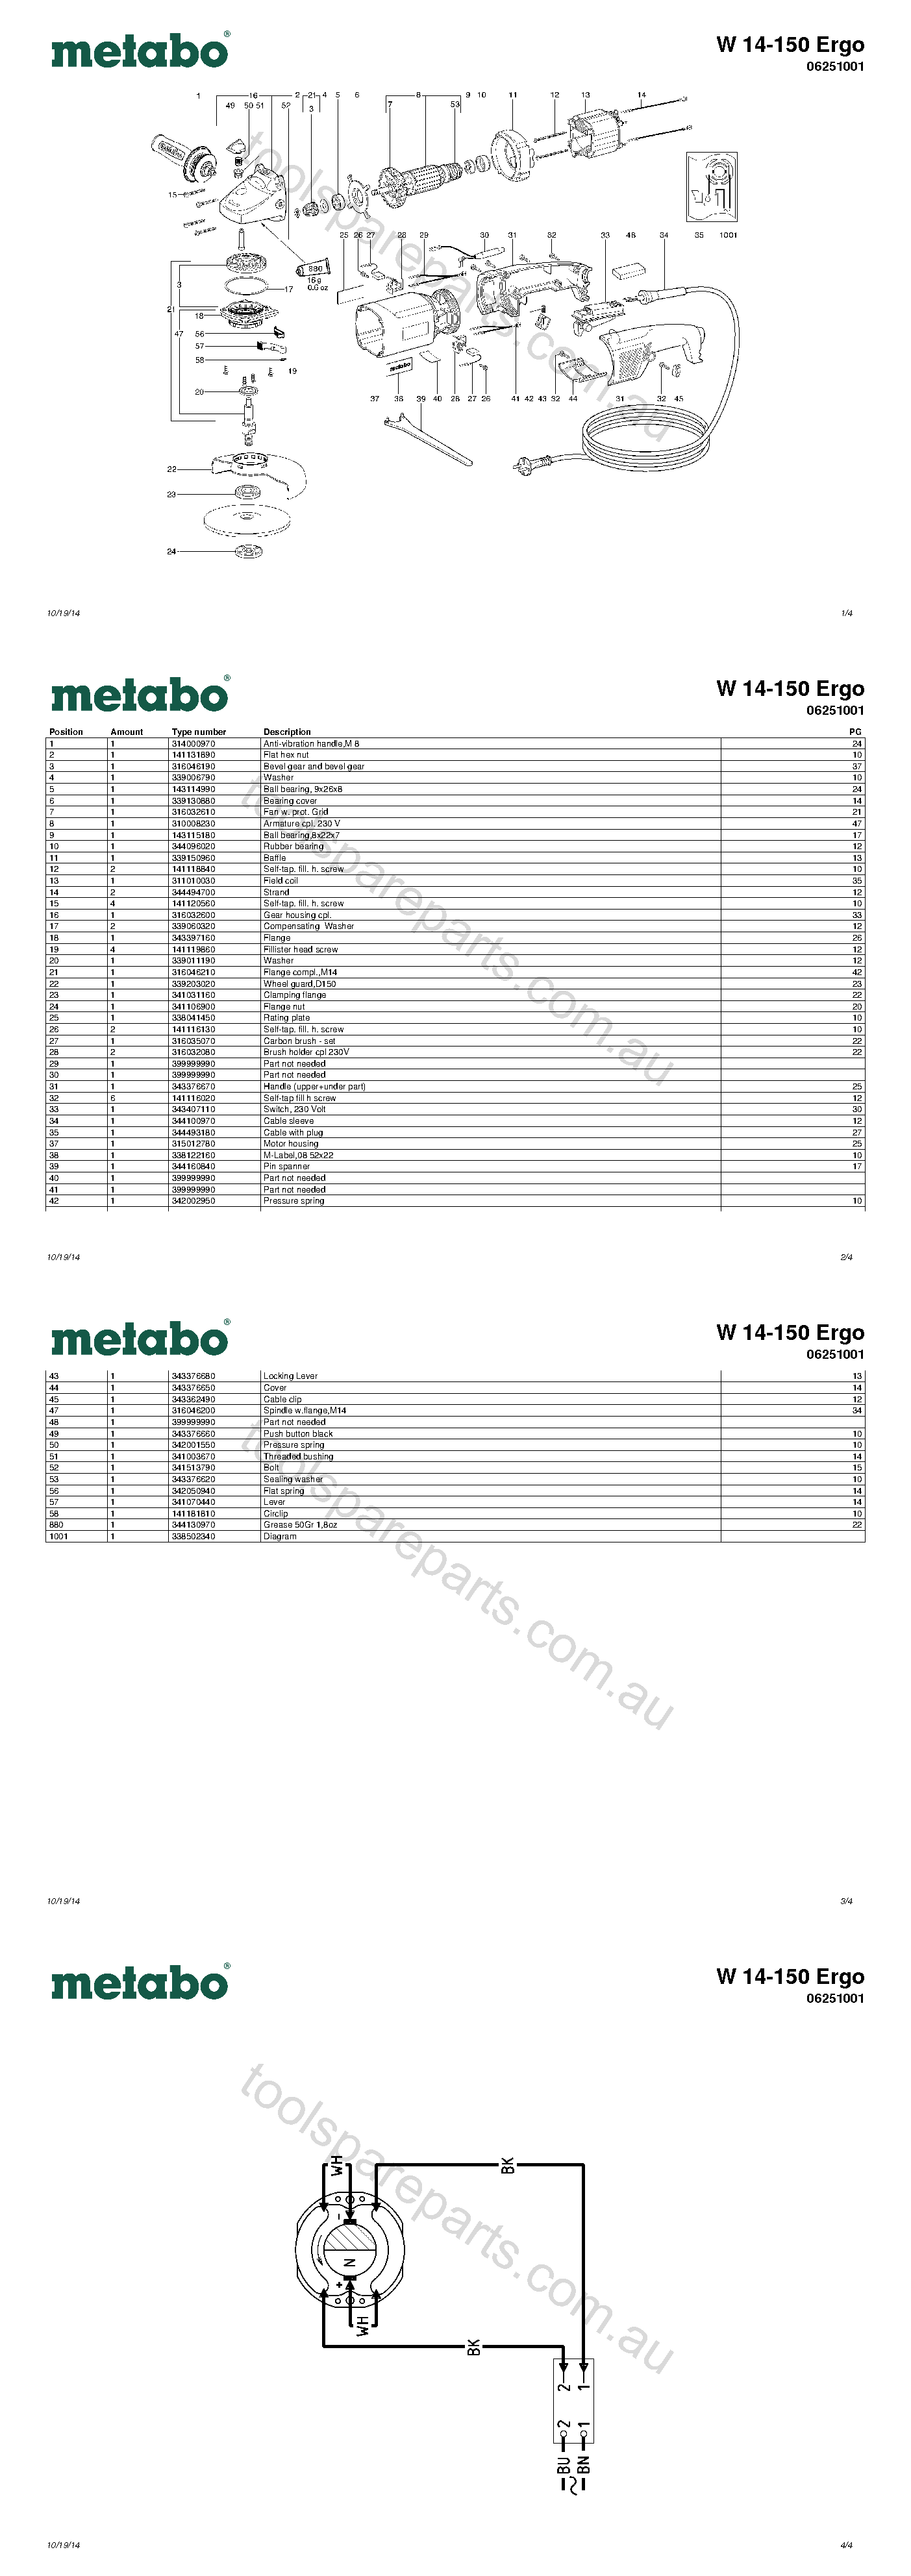 Metabo W 14-150 Ergo 06251001  Diagram 1